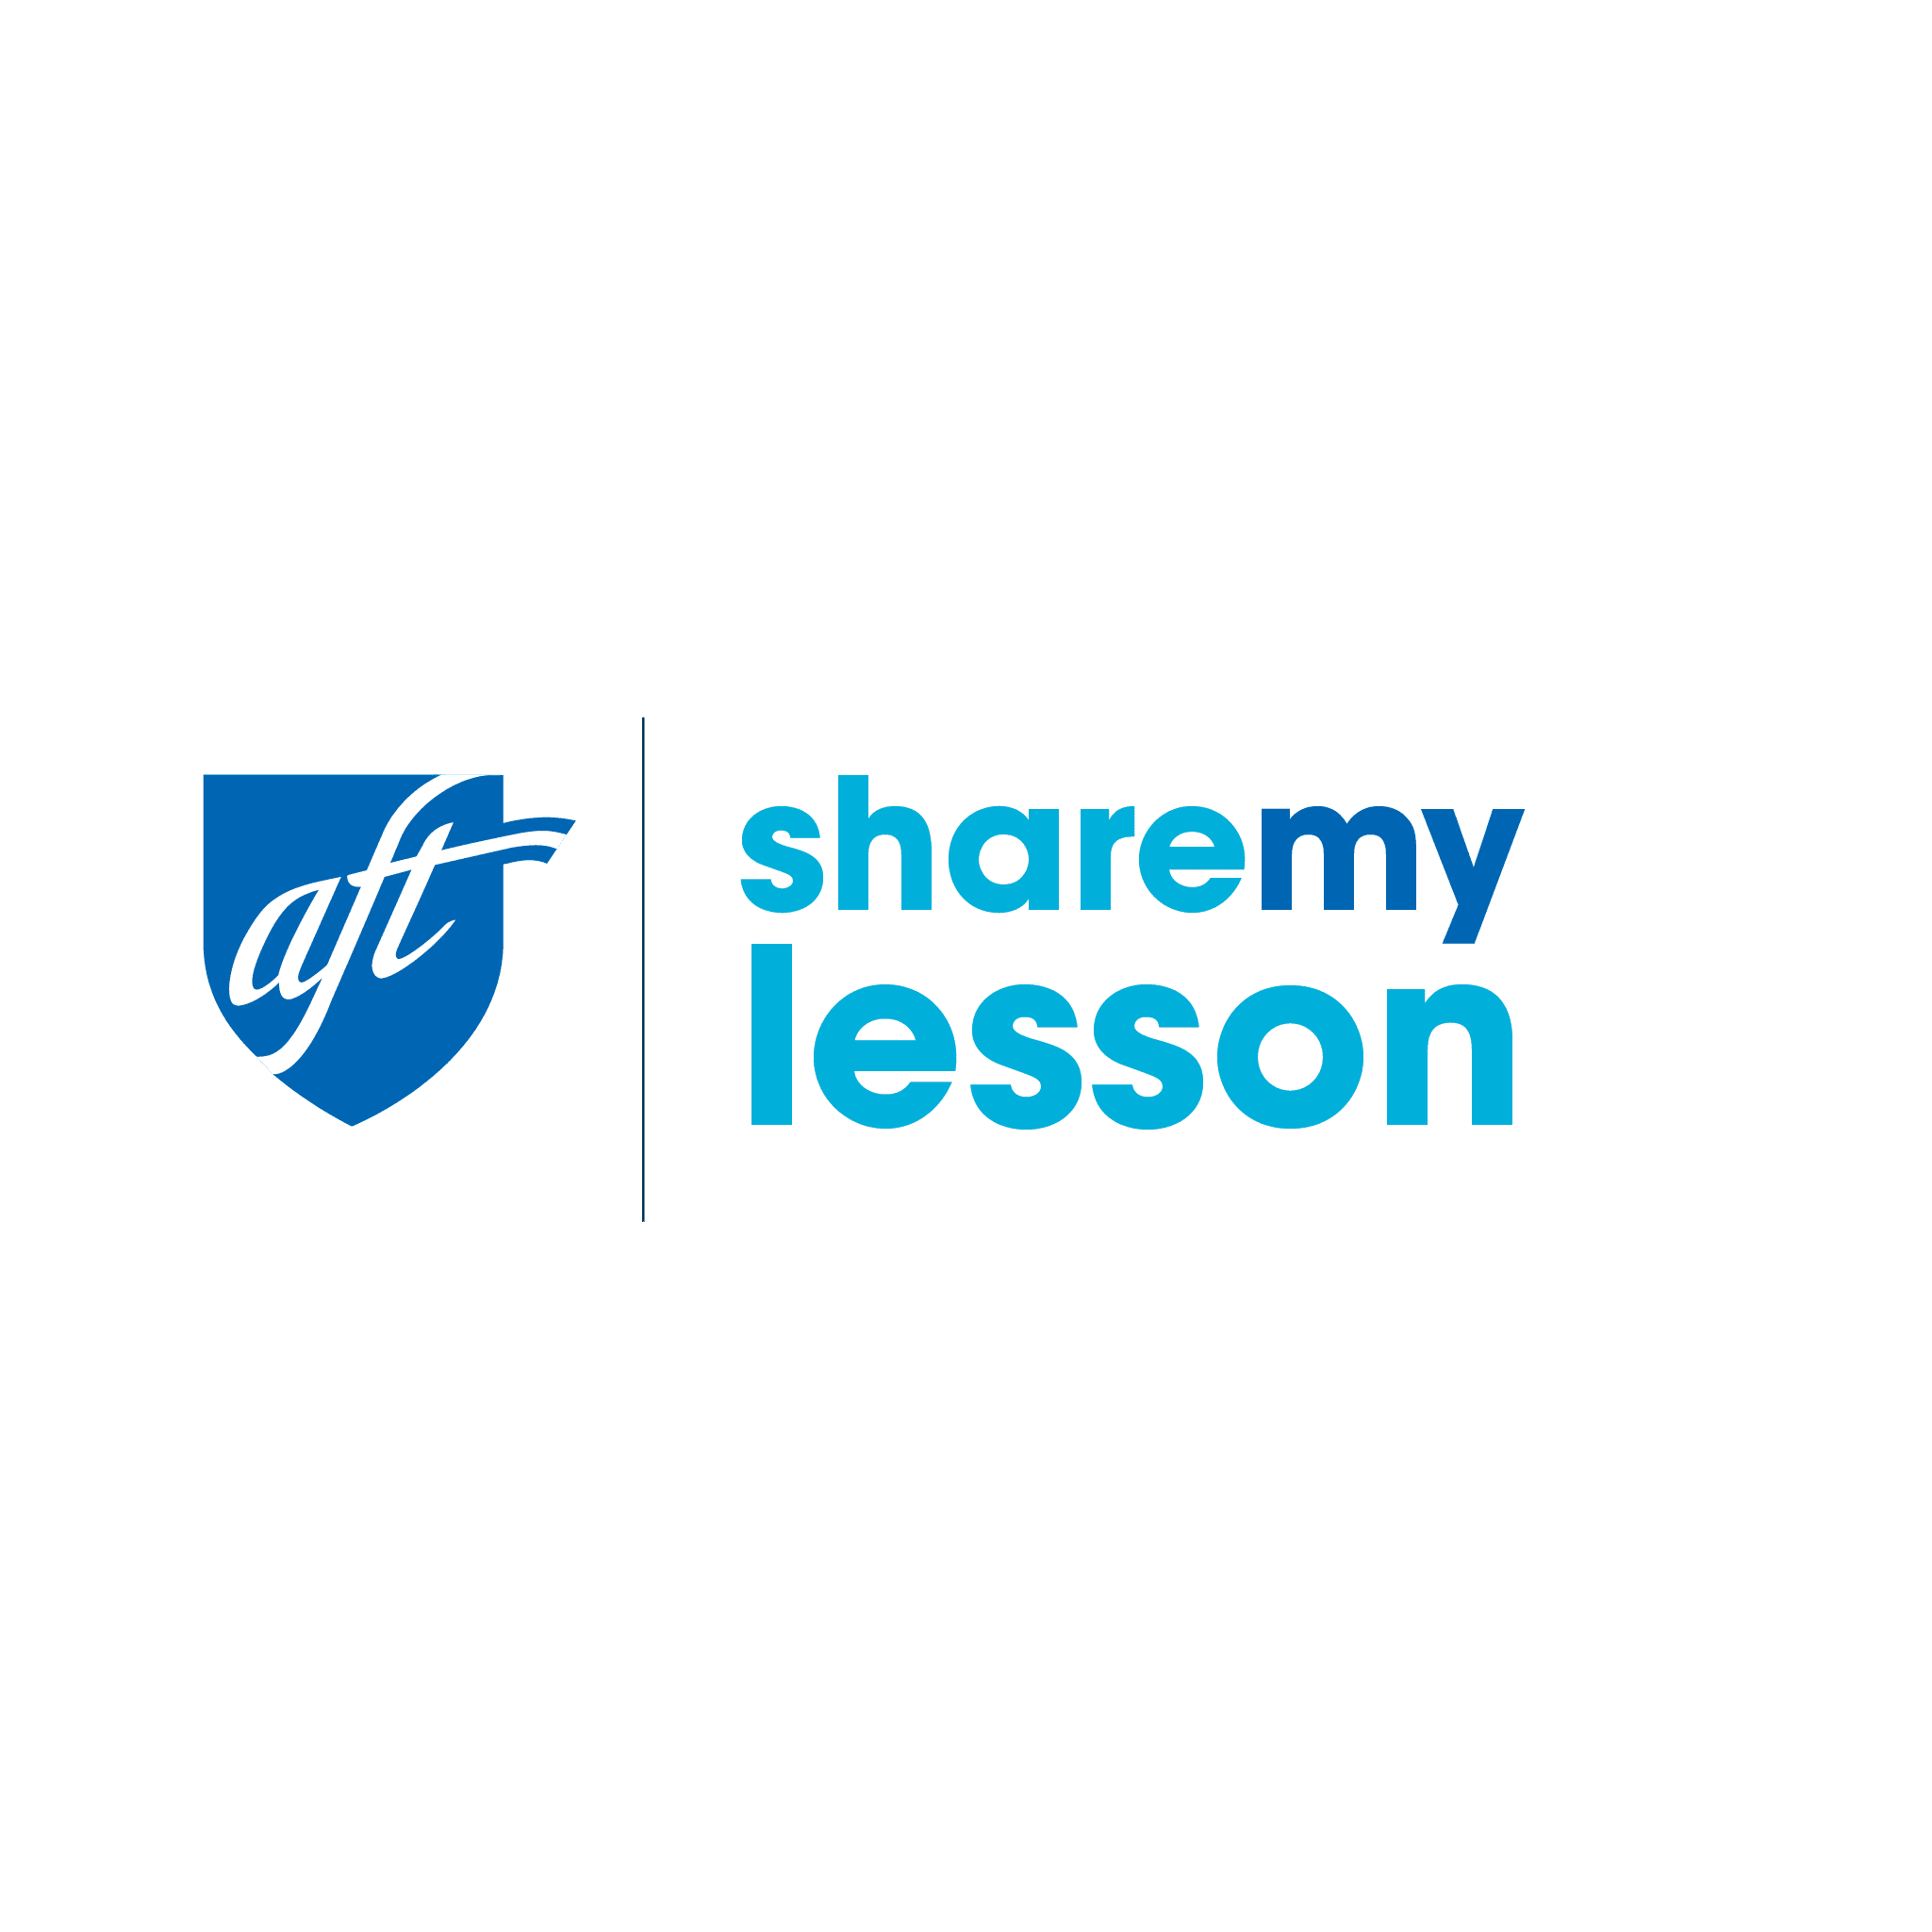 Share my lesson logo